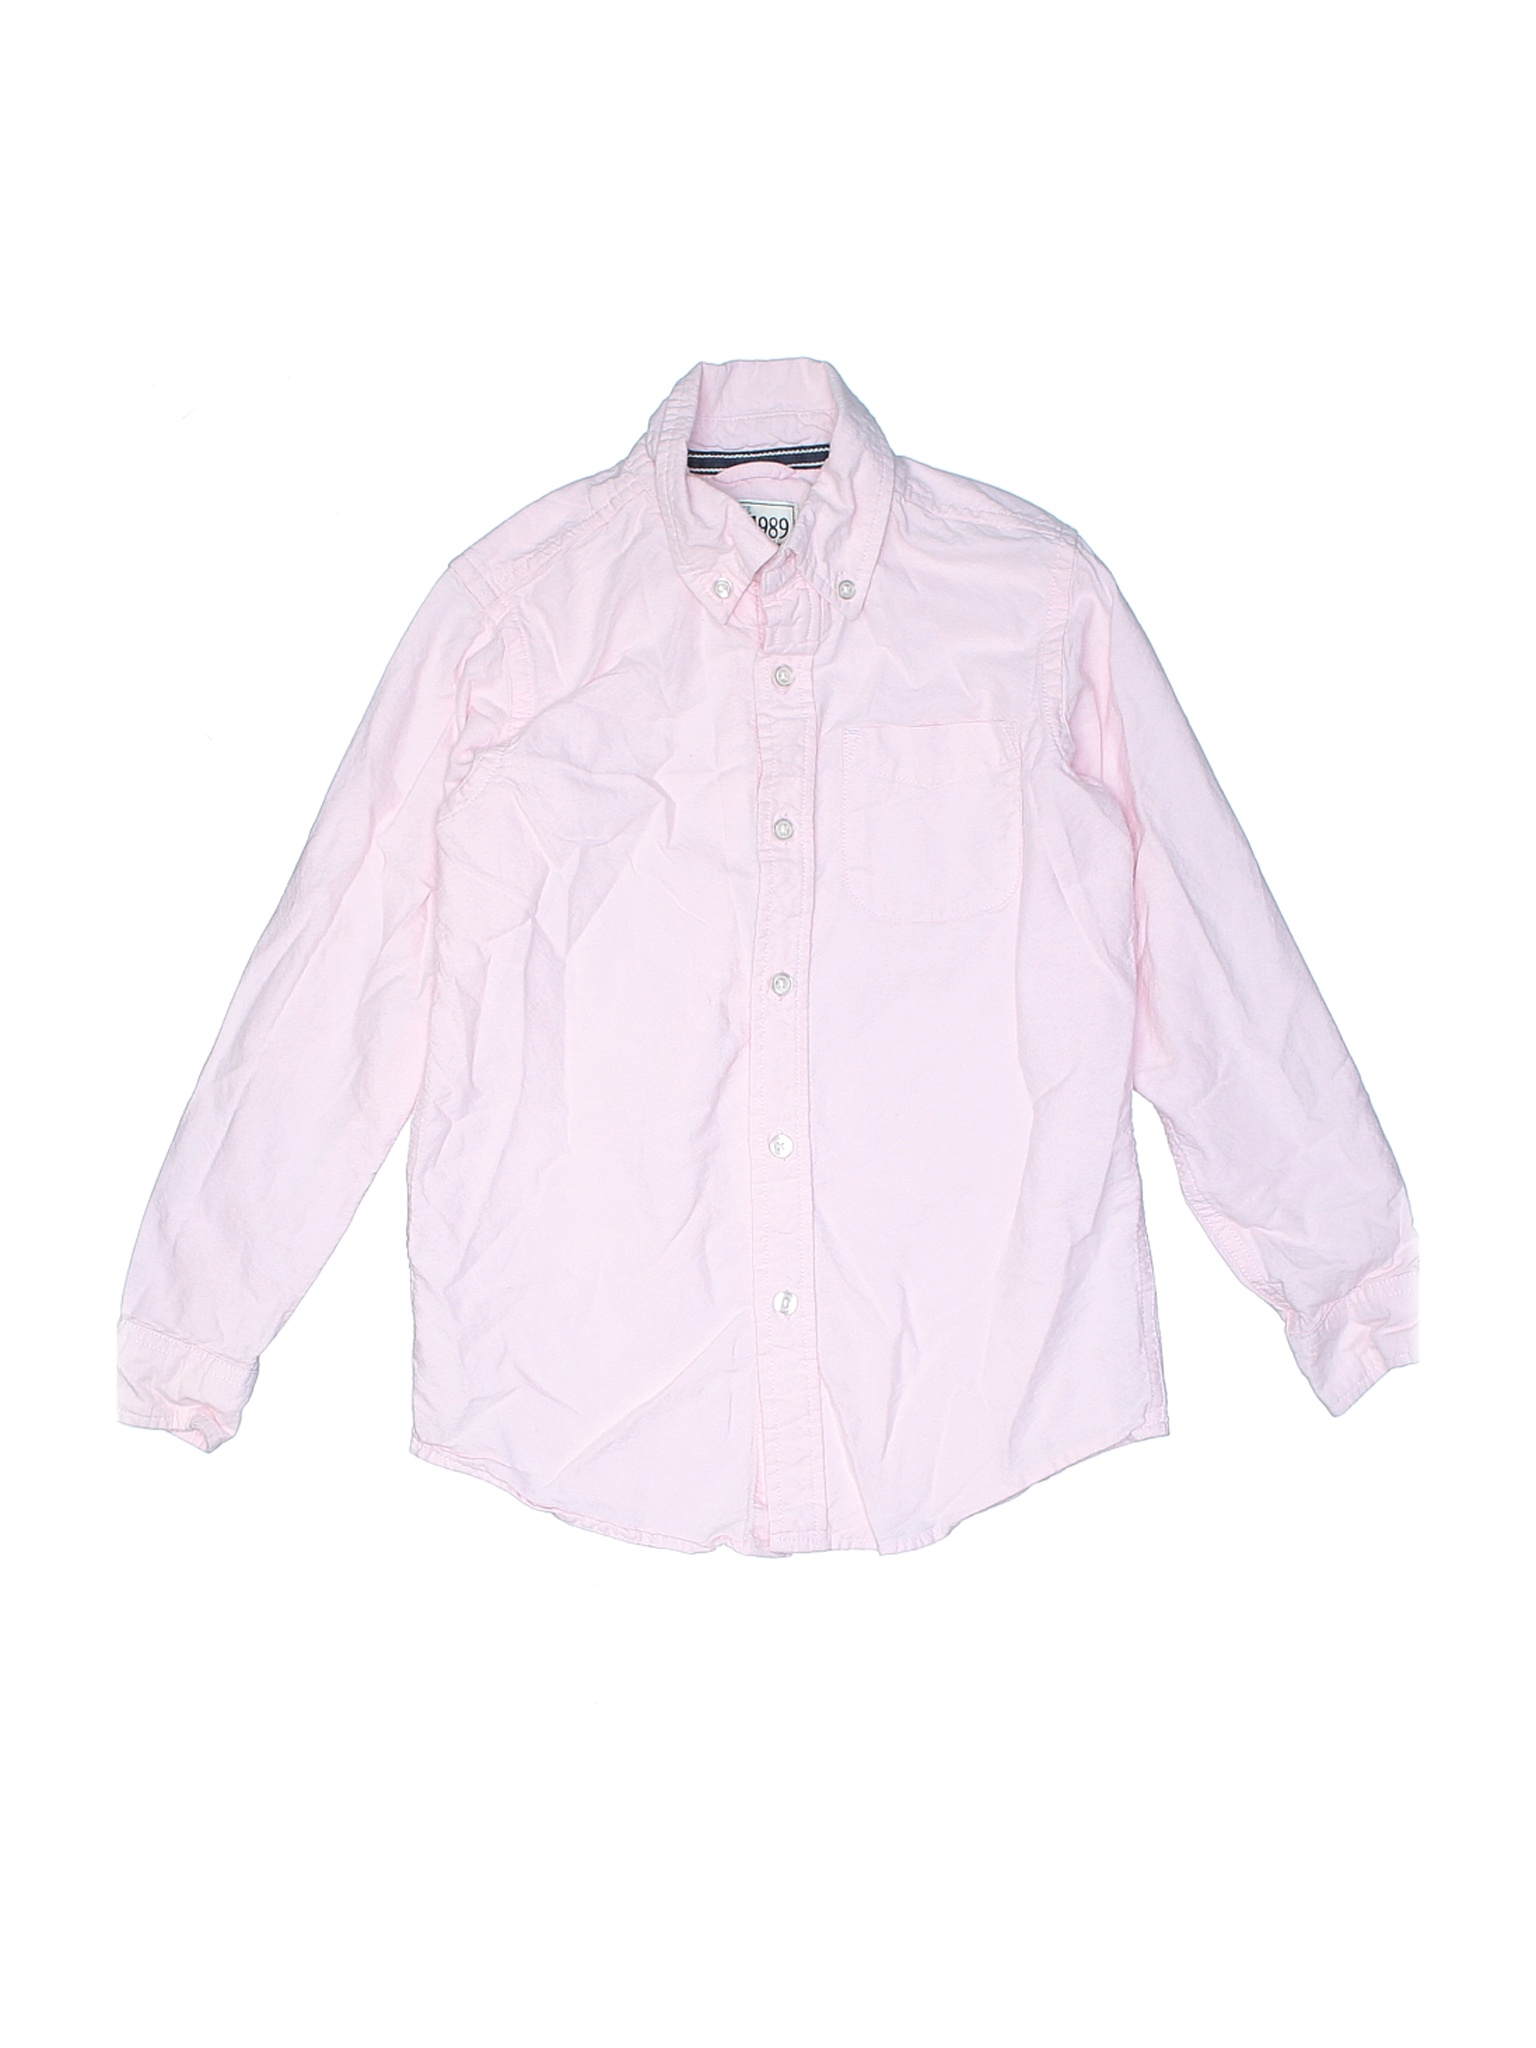 The Children's Place Boys Pink Long Sleeve Button-Down Shirt 7 | eBay